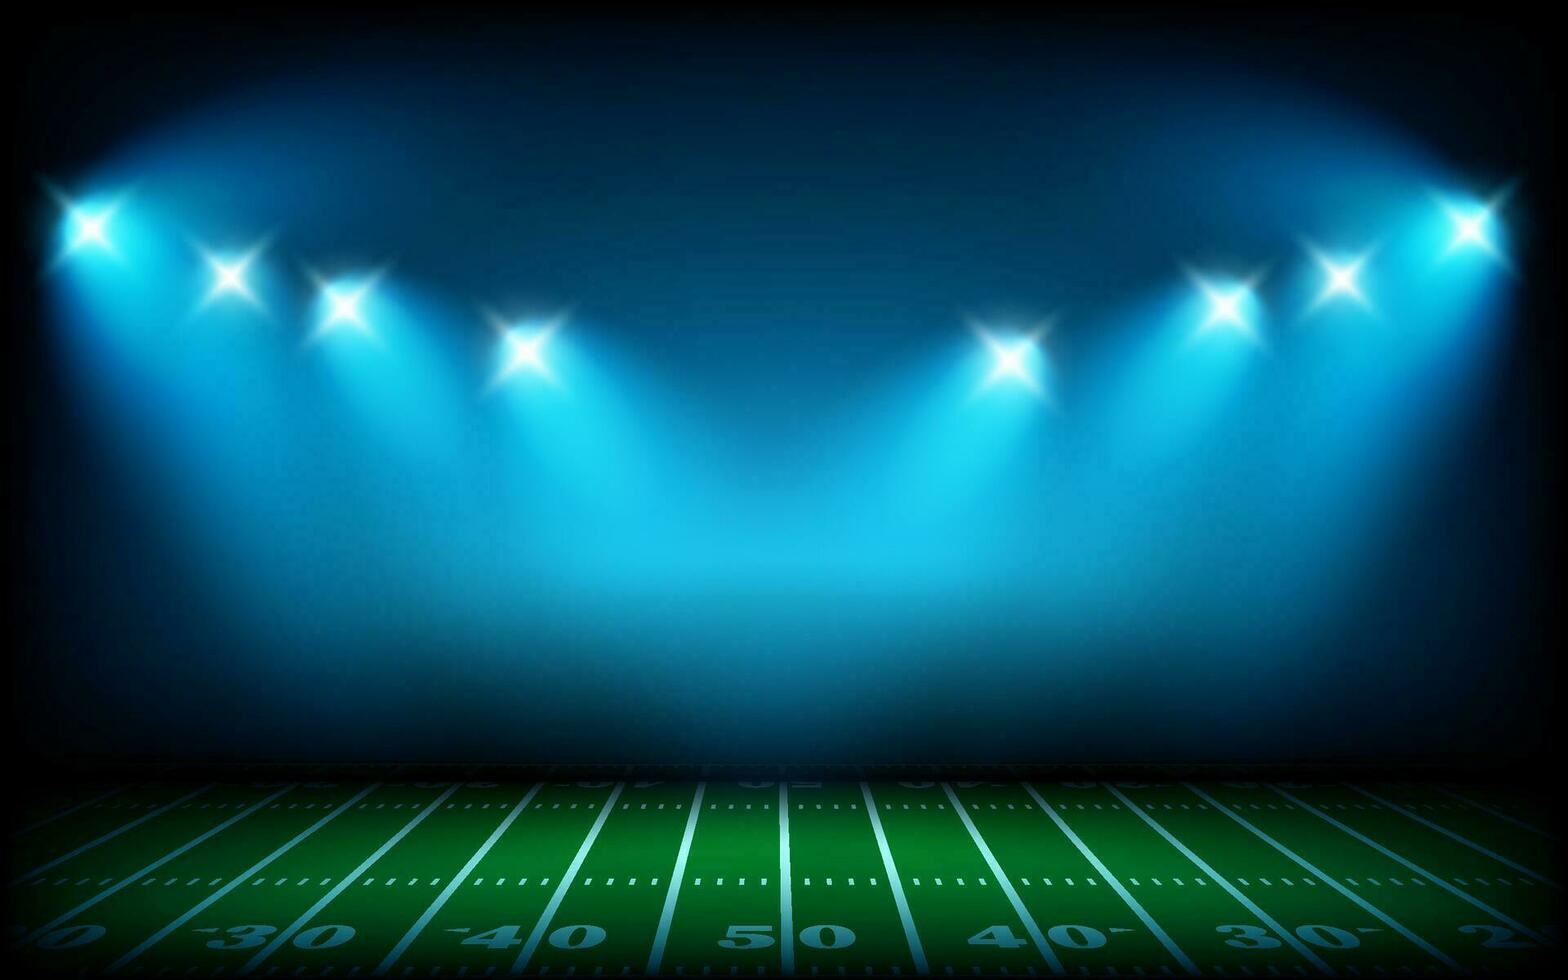 Illuminated american football stadium with projectors. 3d vector illustration